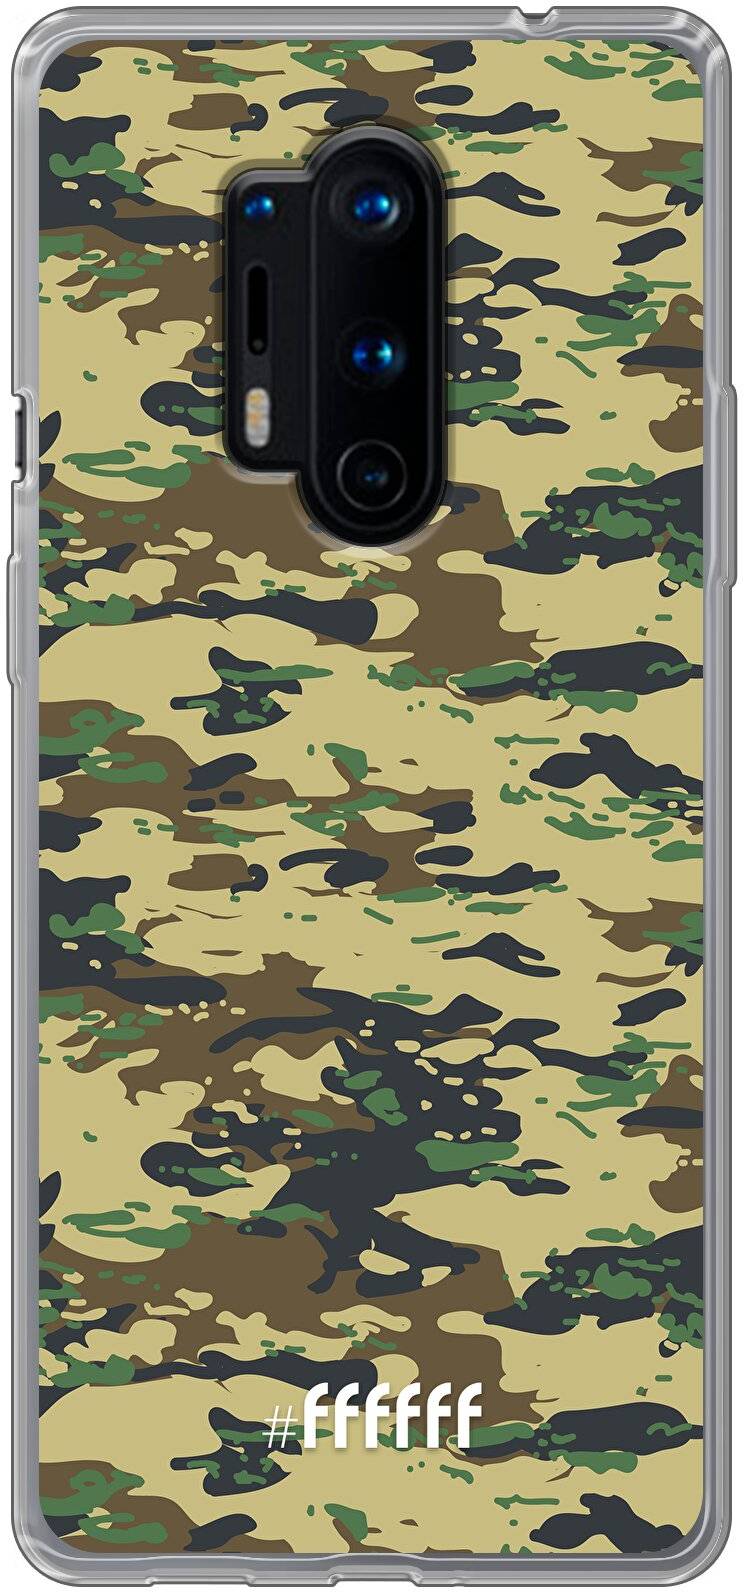 Desert Camouflage 8 Pro